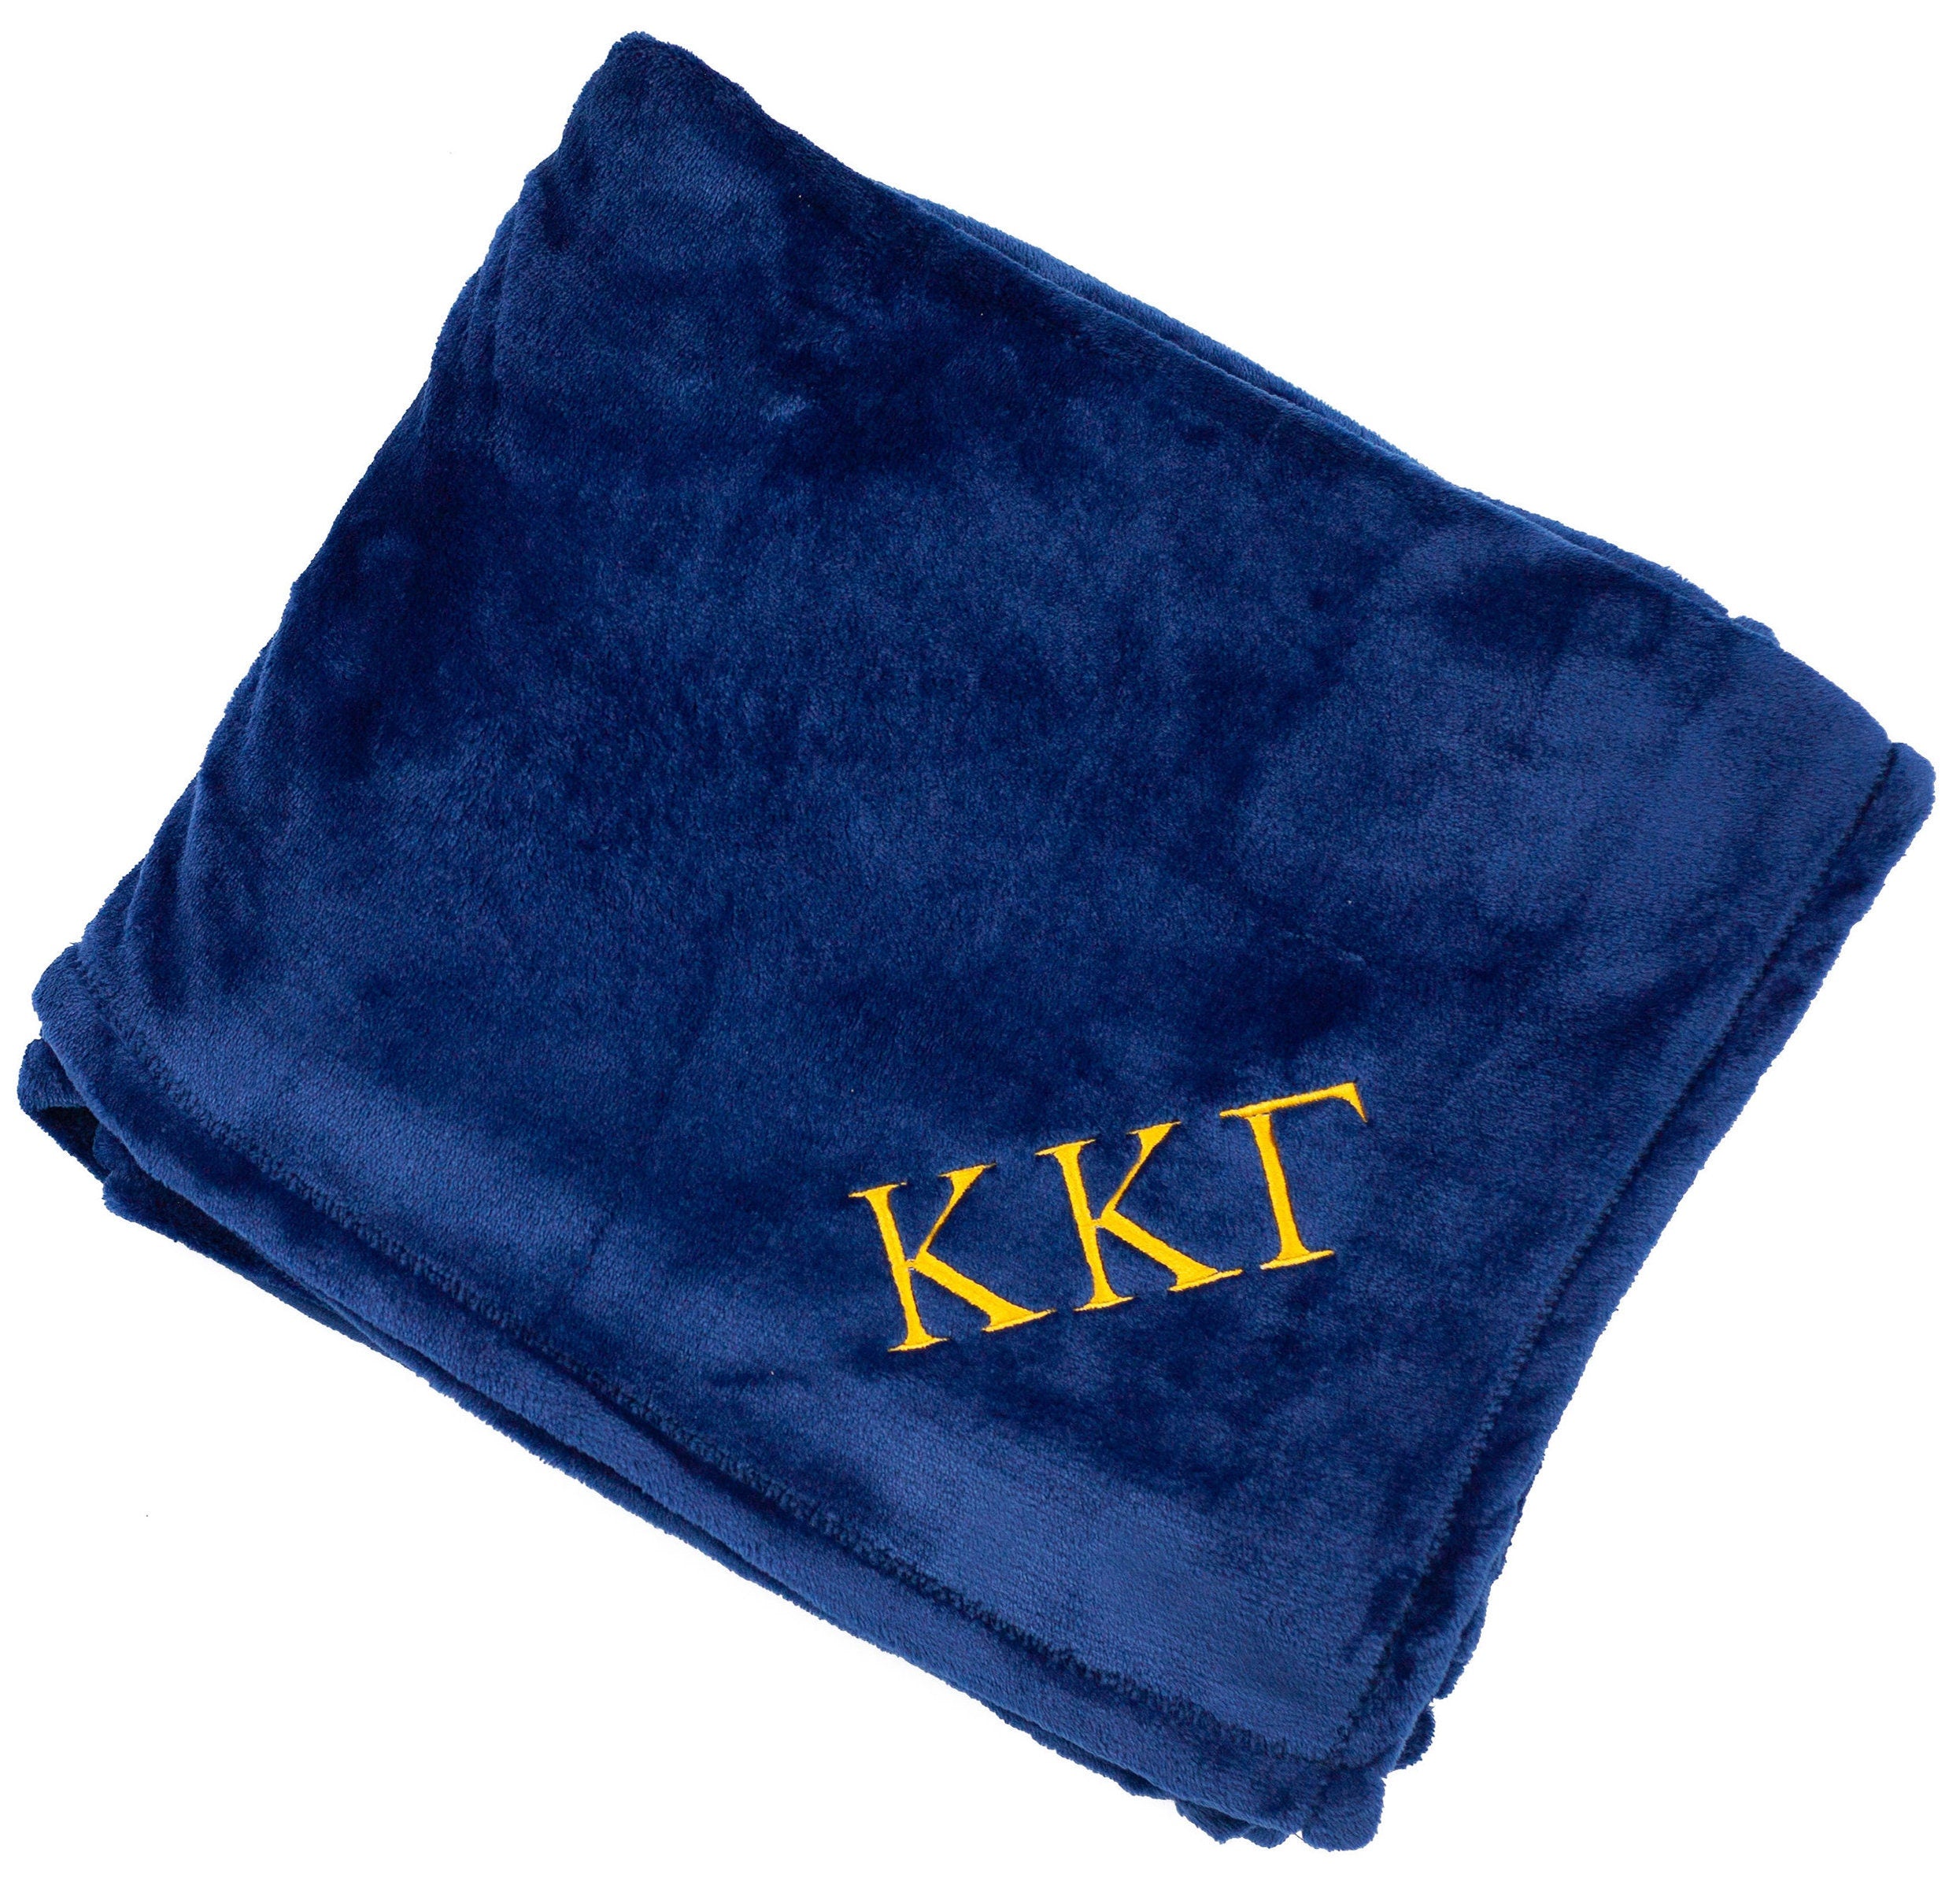 Kappa Kappa Gamma Plush Throw Blanket - Navy/Gold - Go Greek Chic